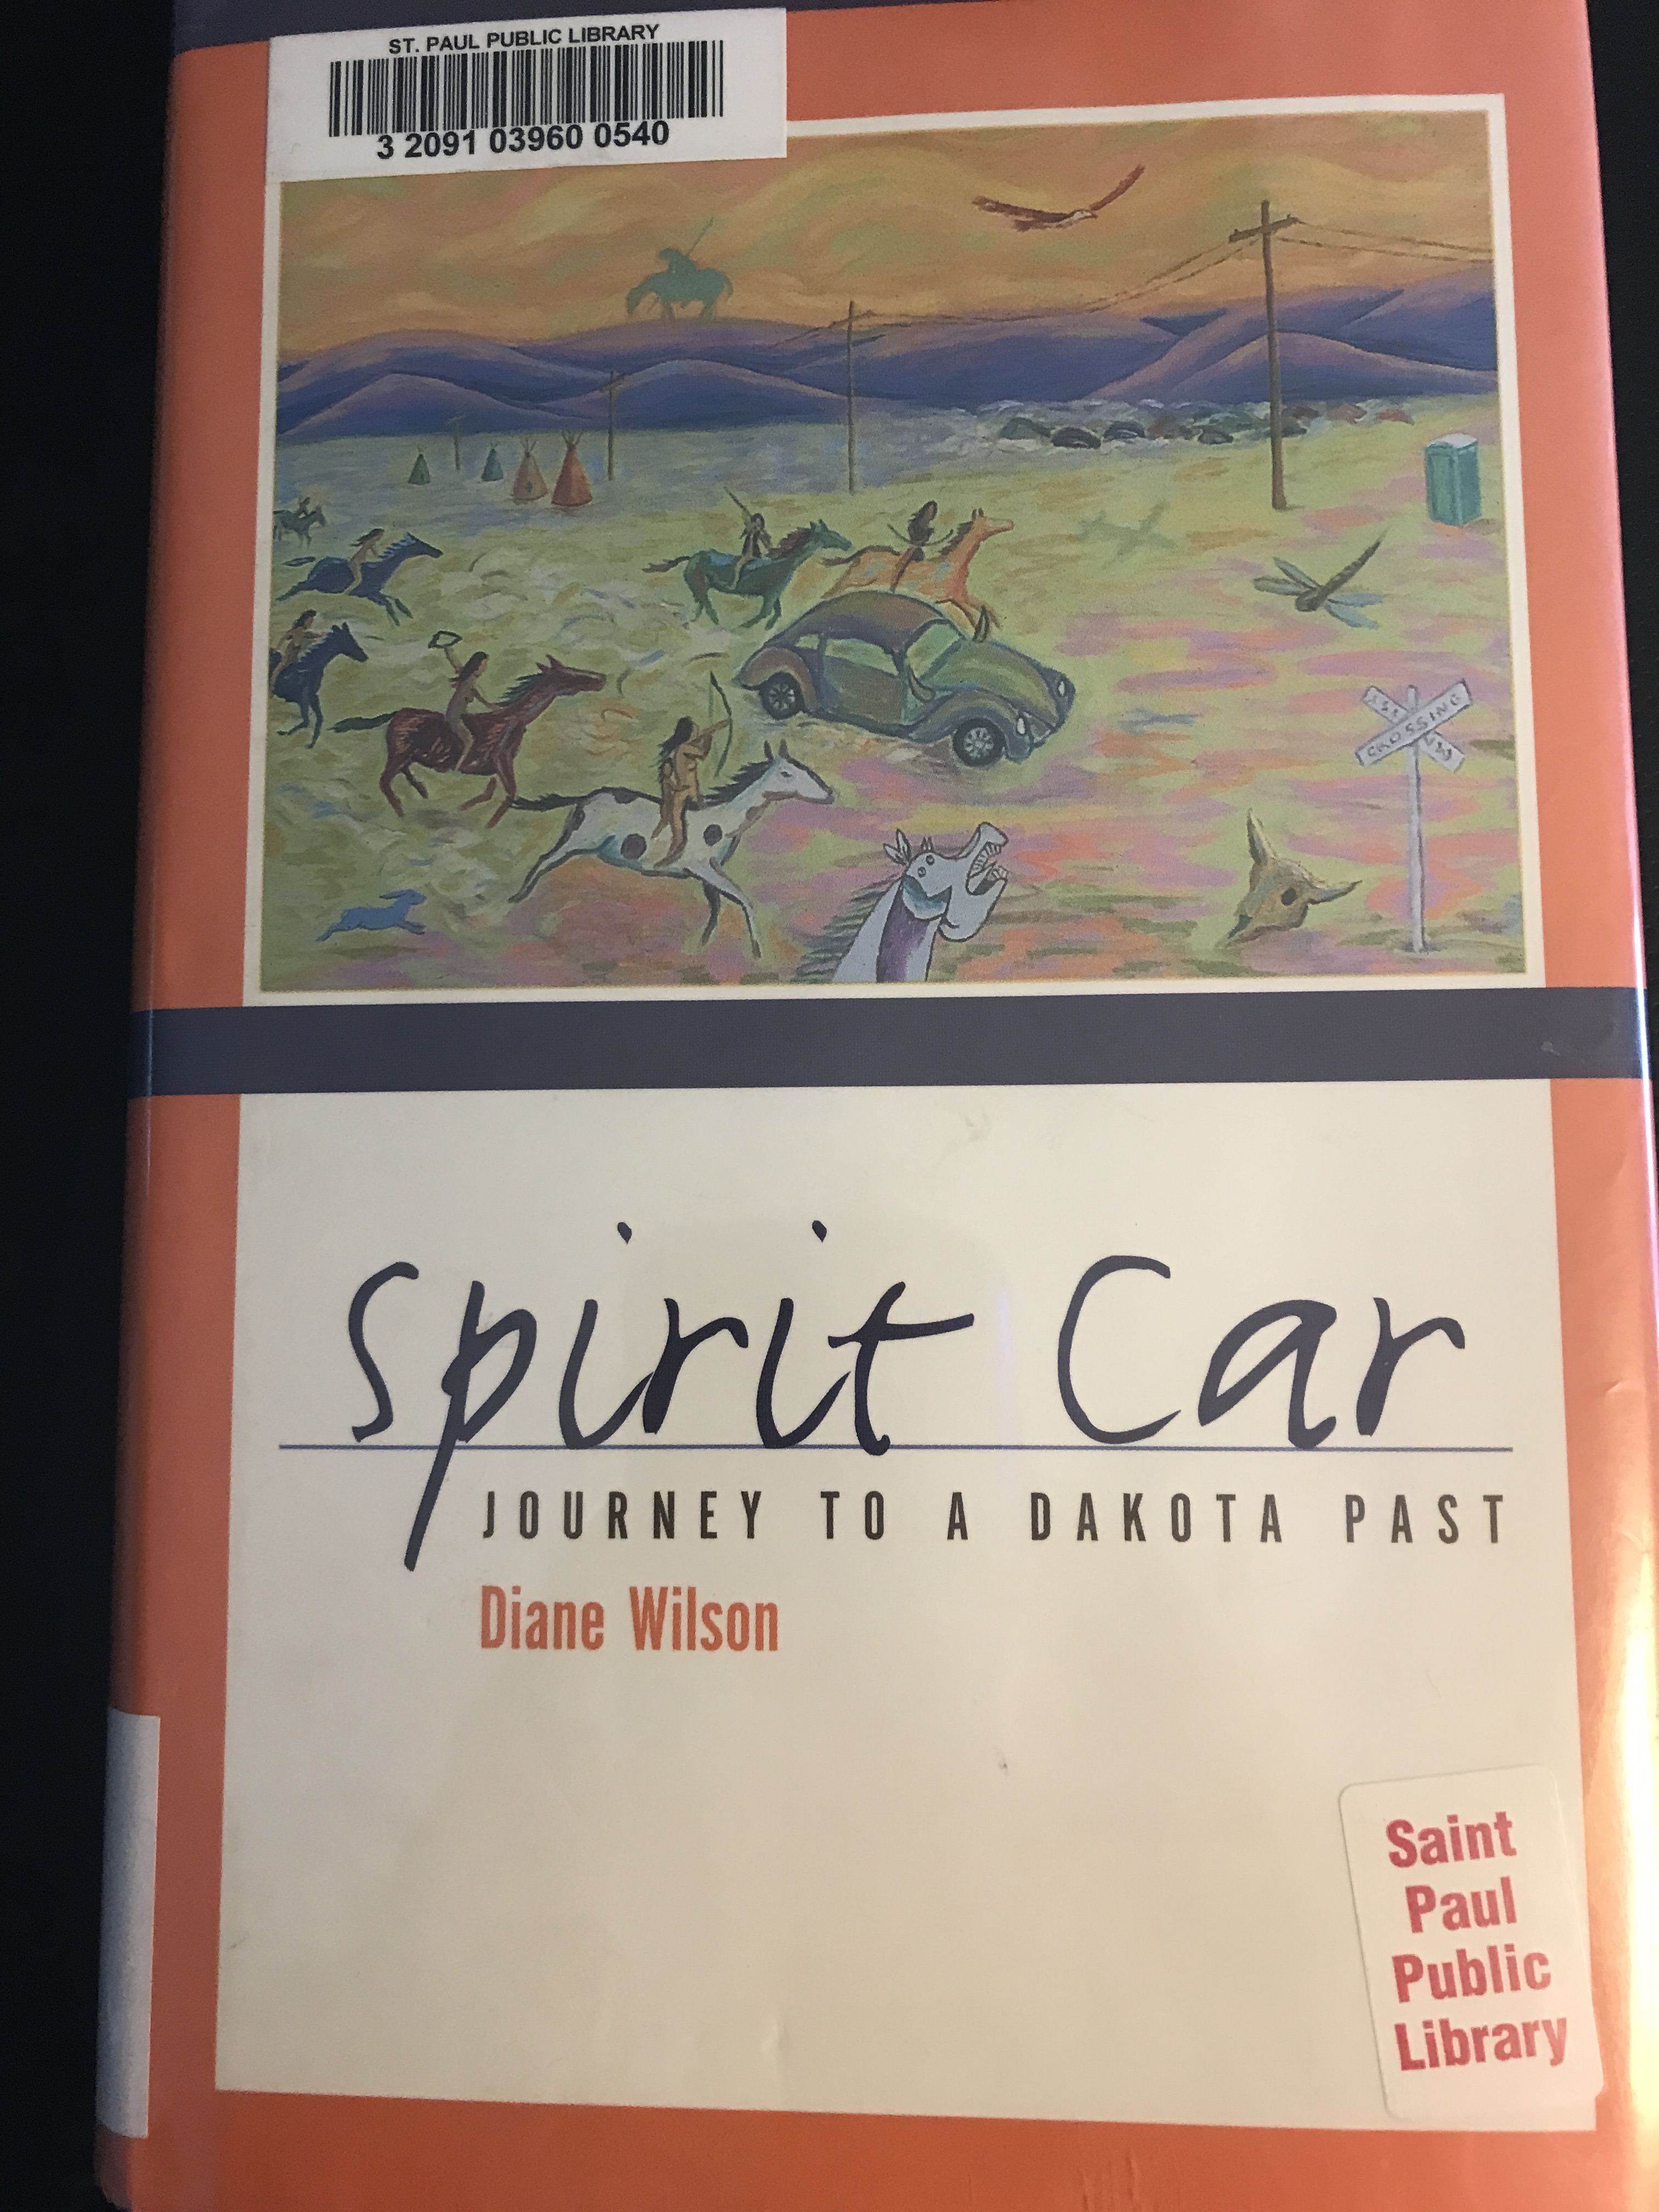 spirit car journey to a dakota past